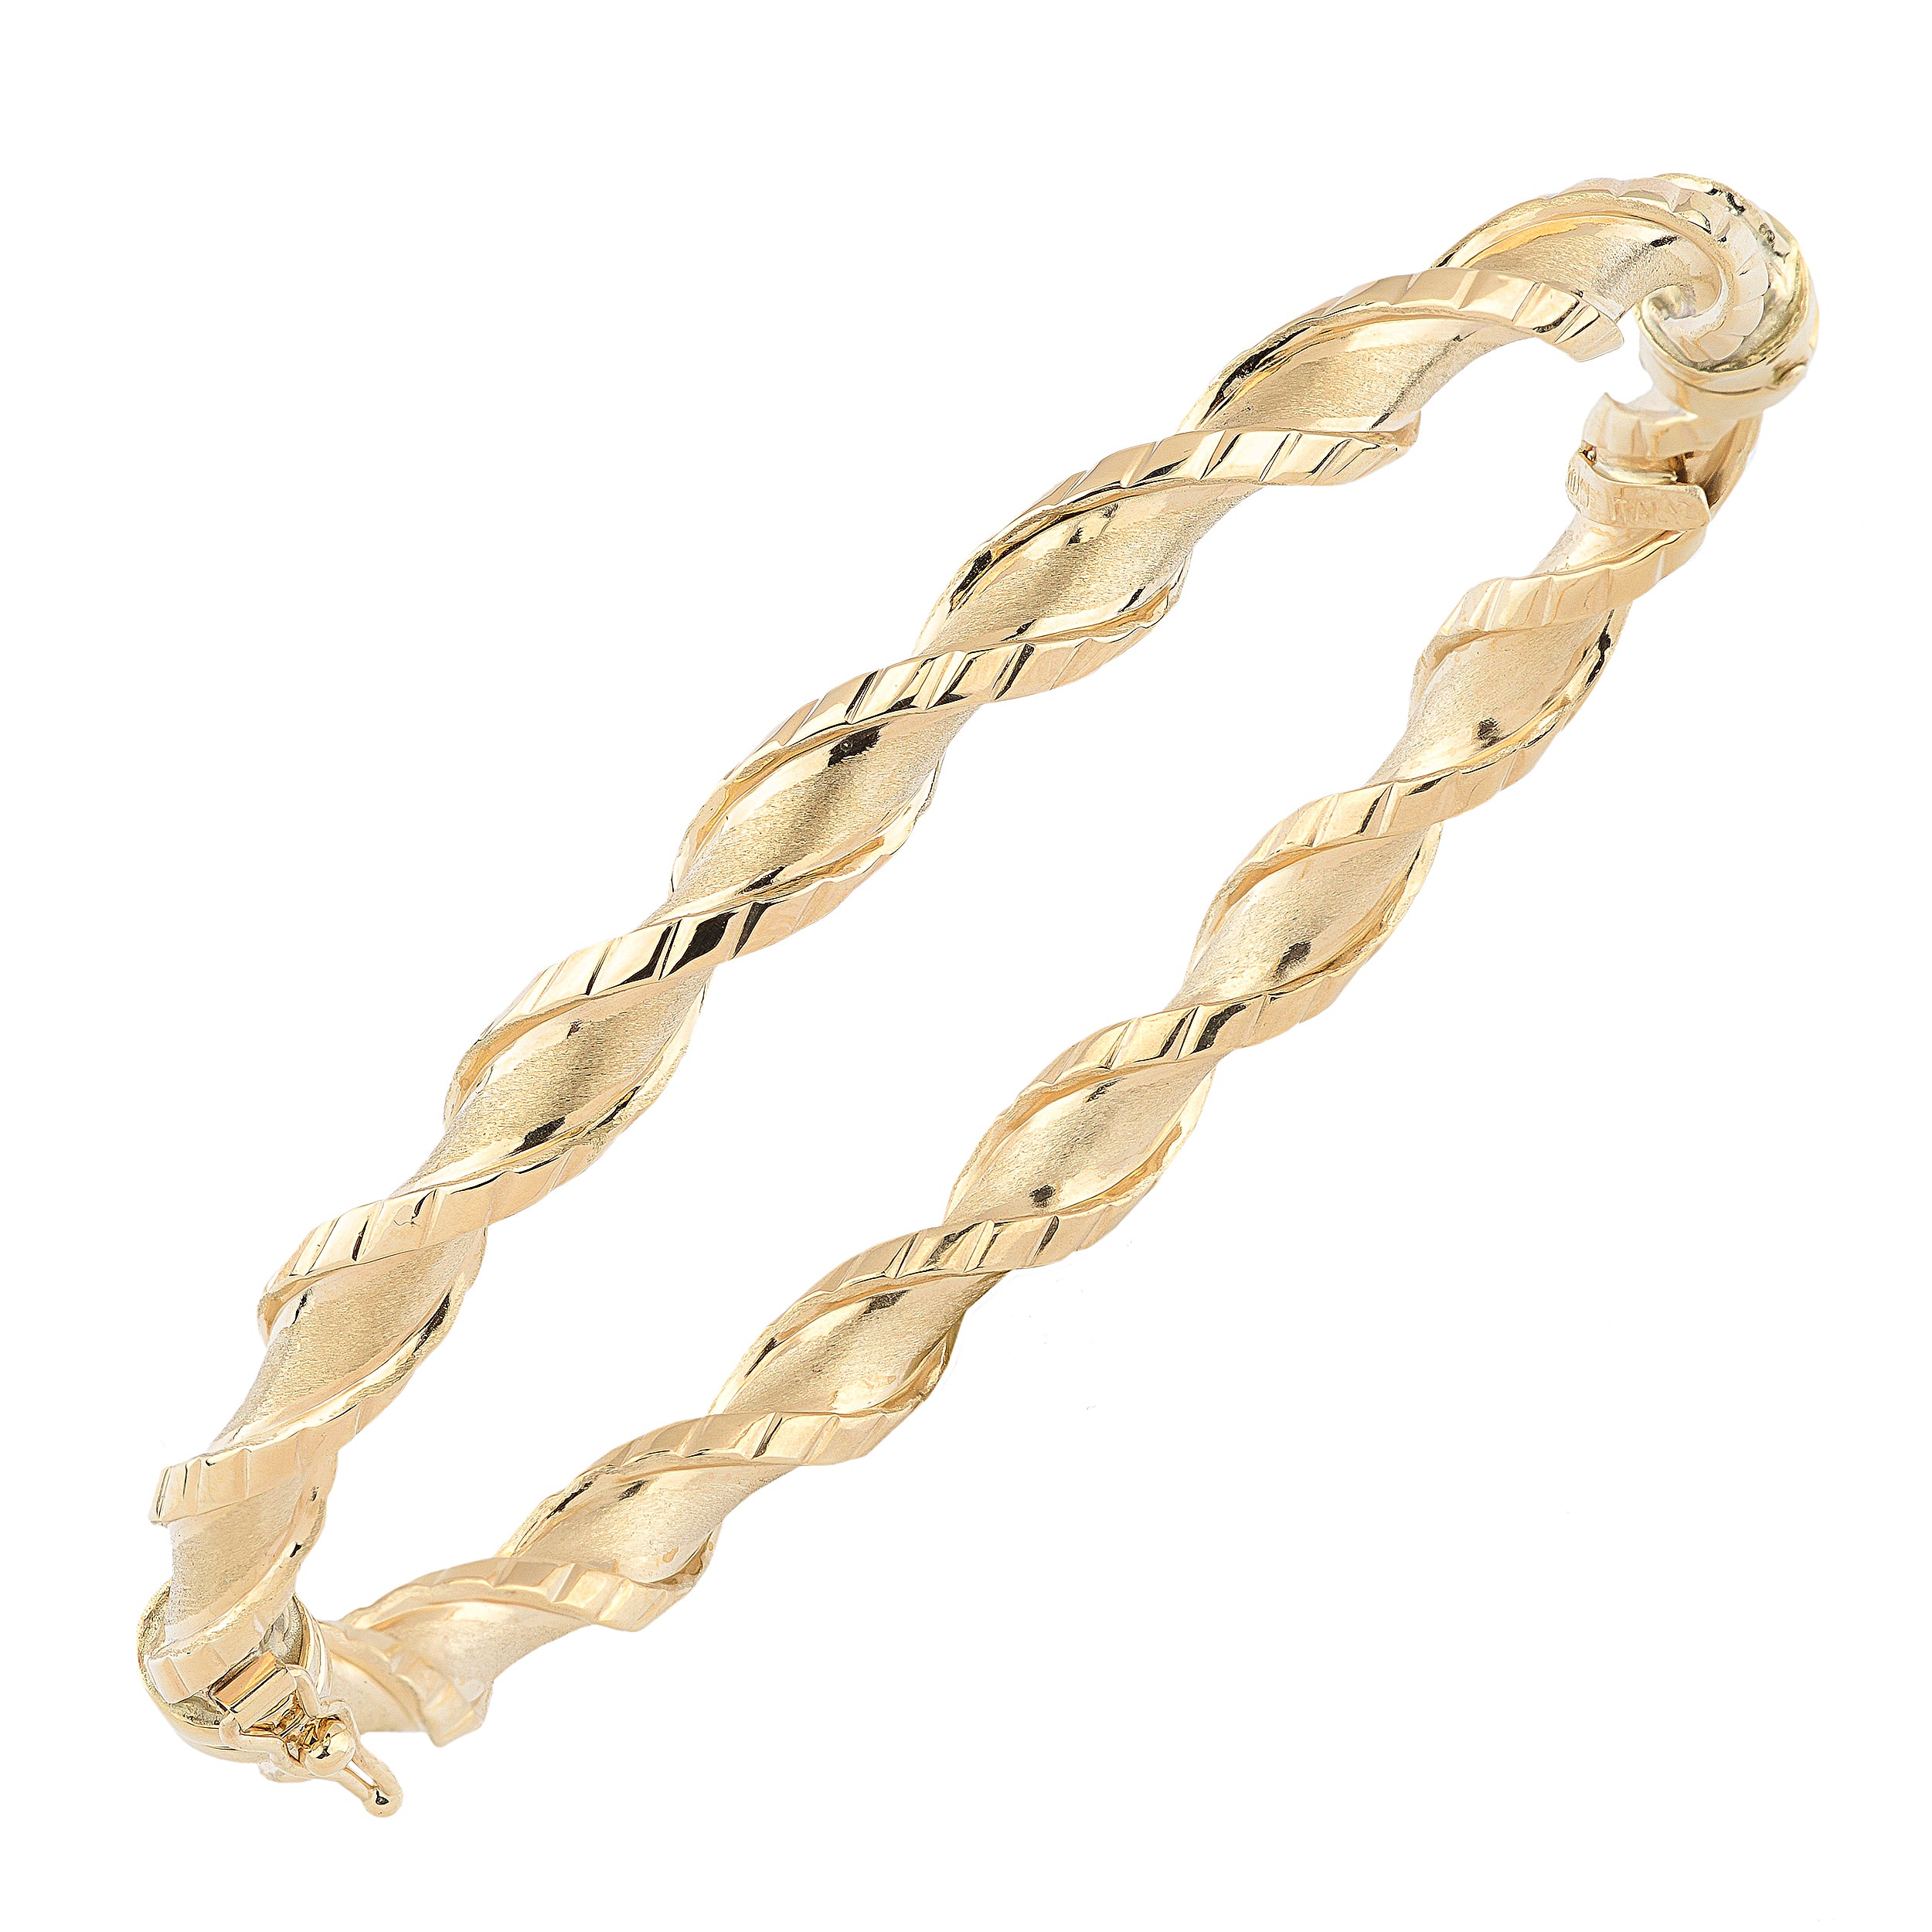 10k Yellow Gold Twisted Women's Bangle Bracelet, 7.75"